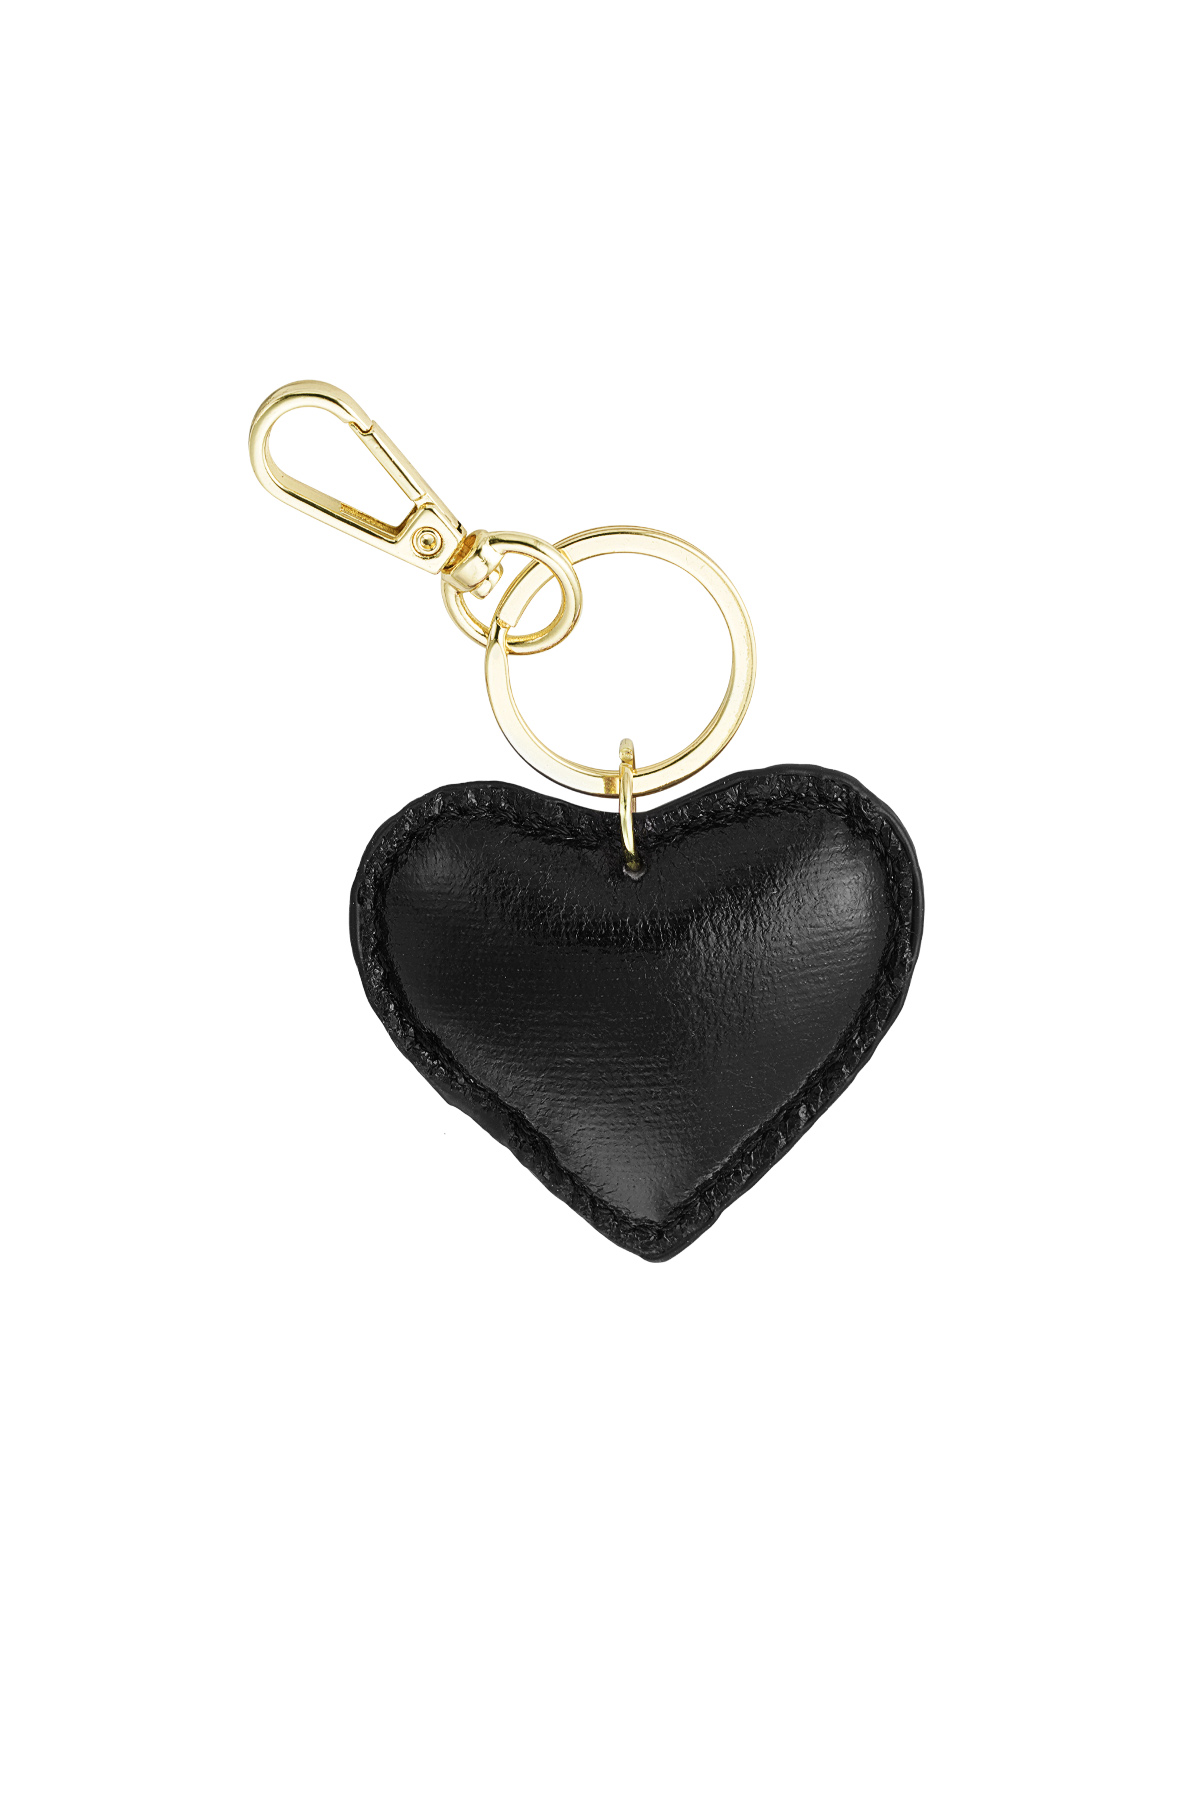 Keychain heart - black h5 